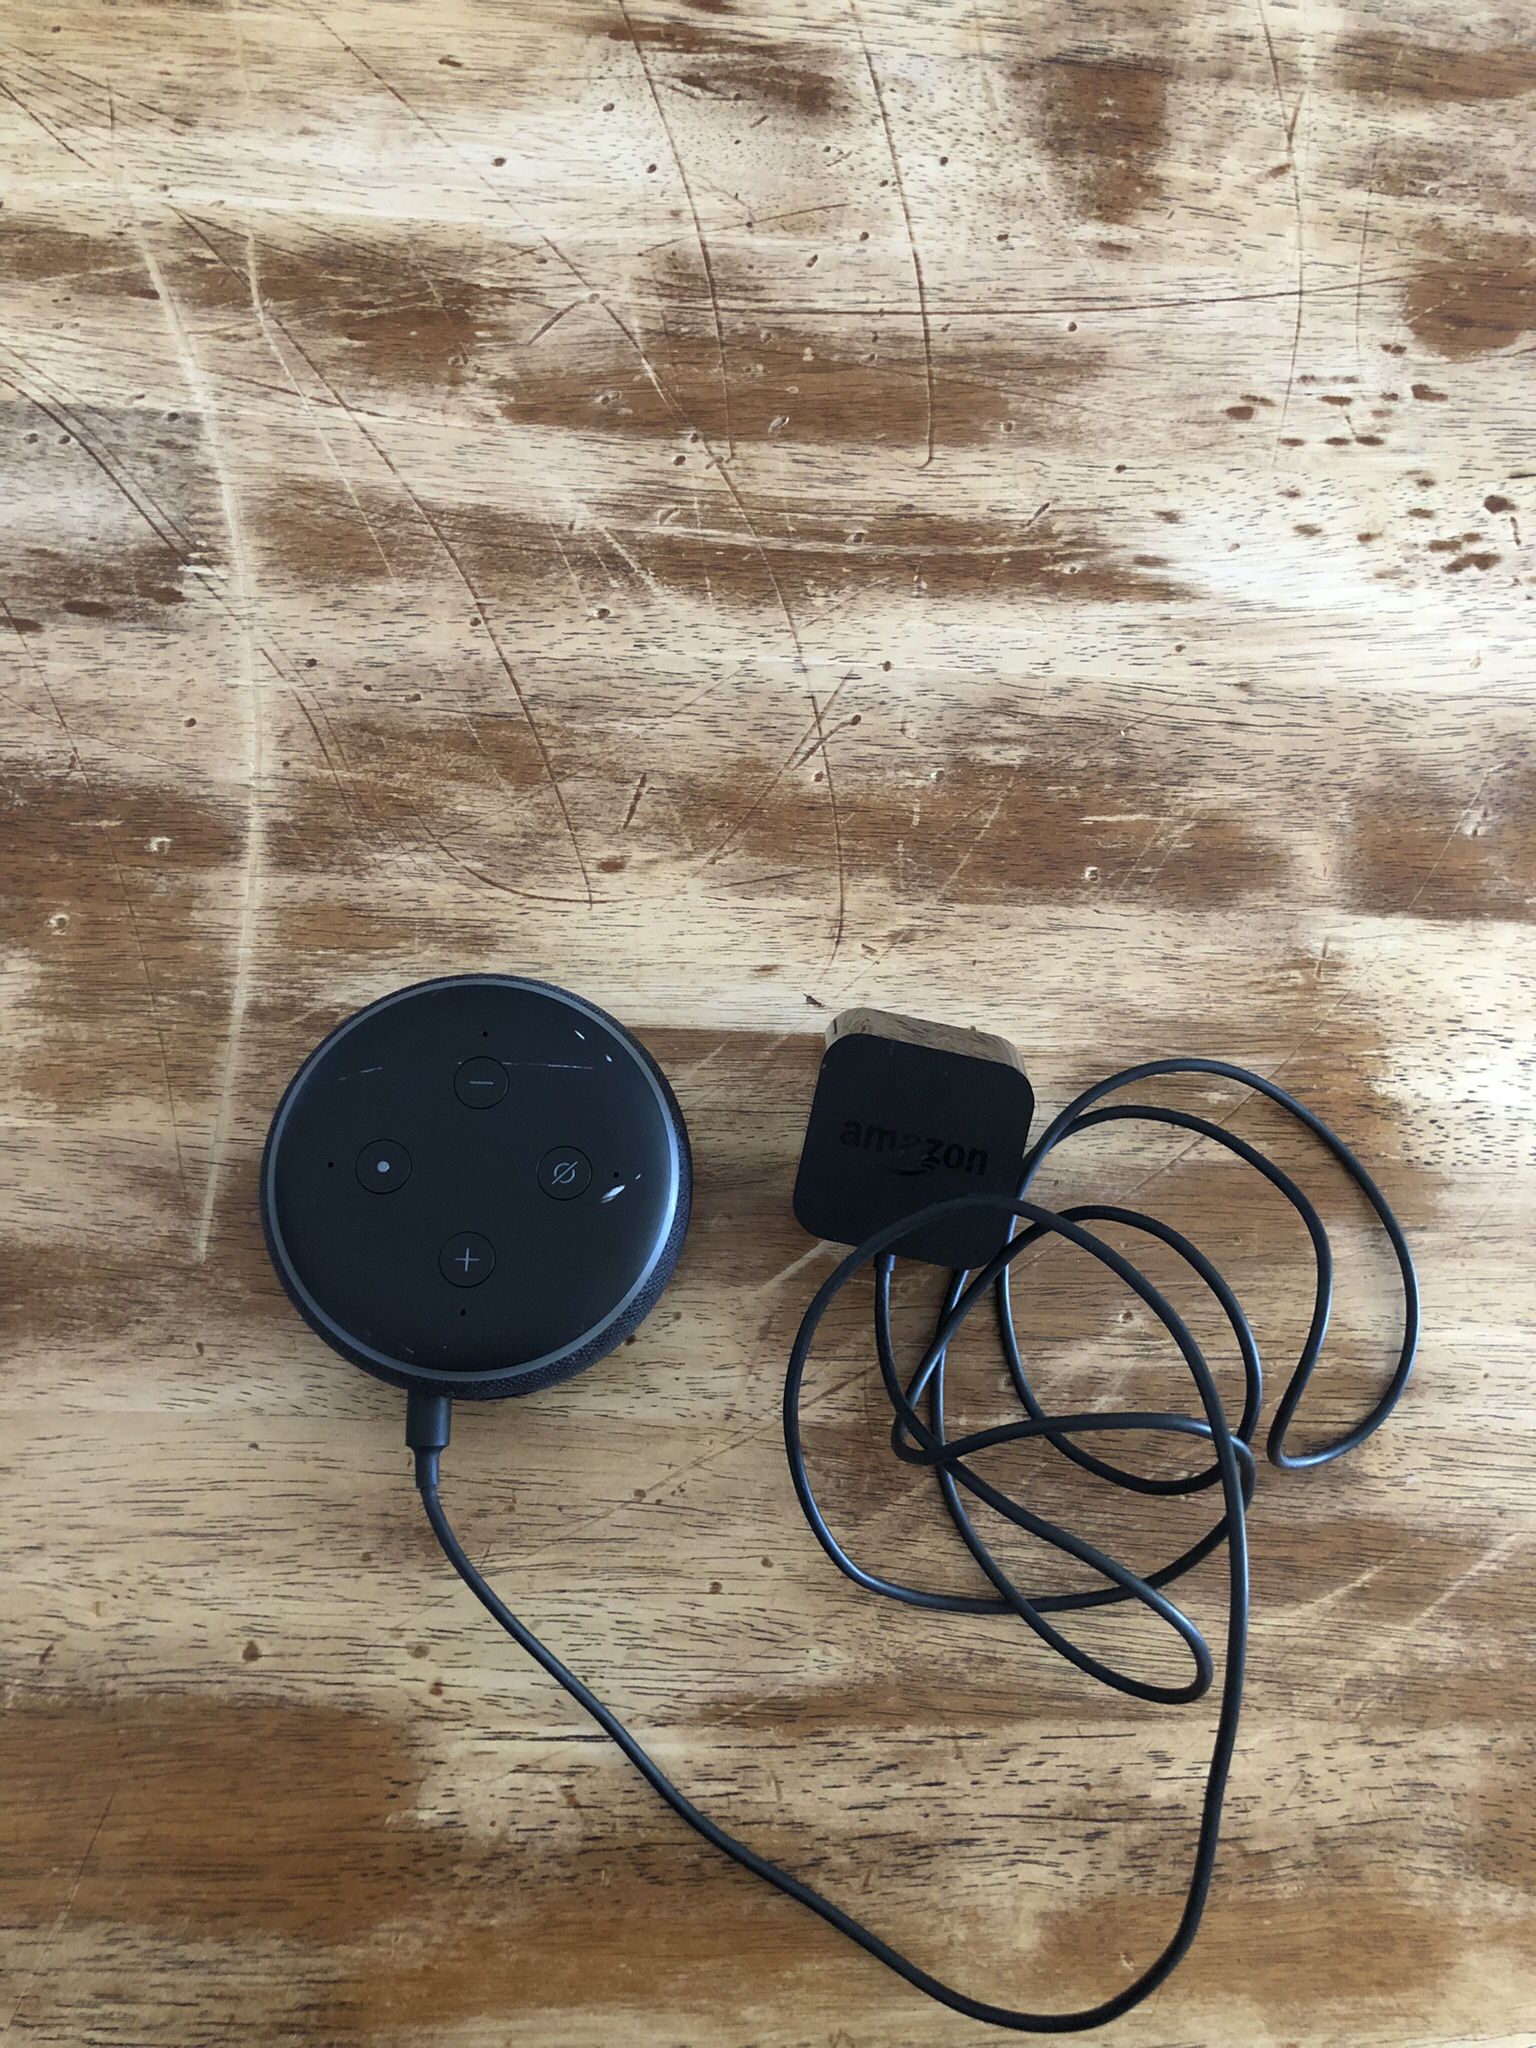 Alexa Echo Dot 